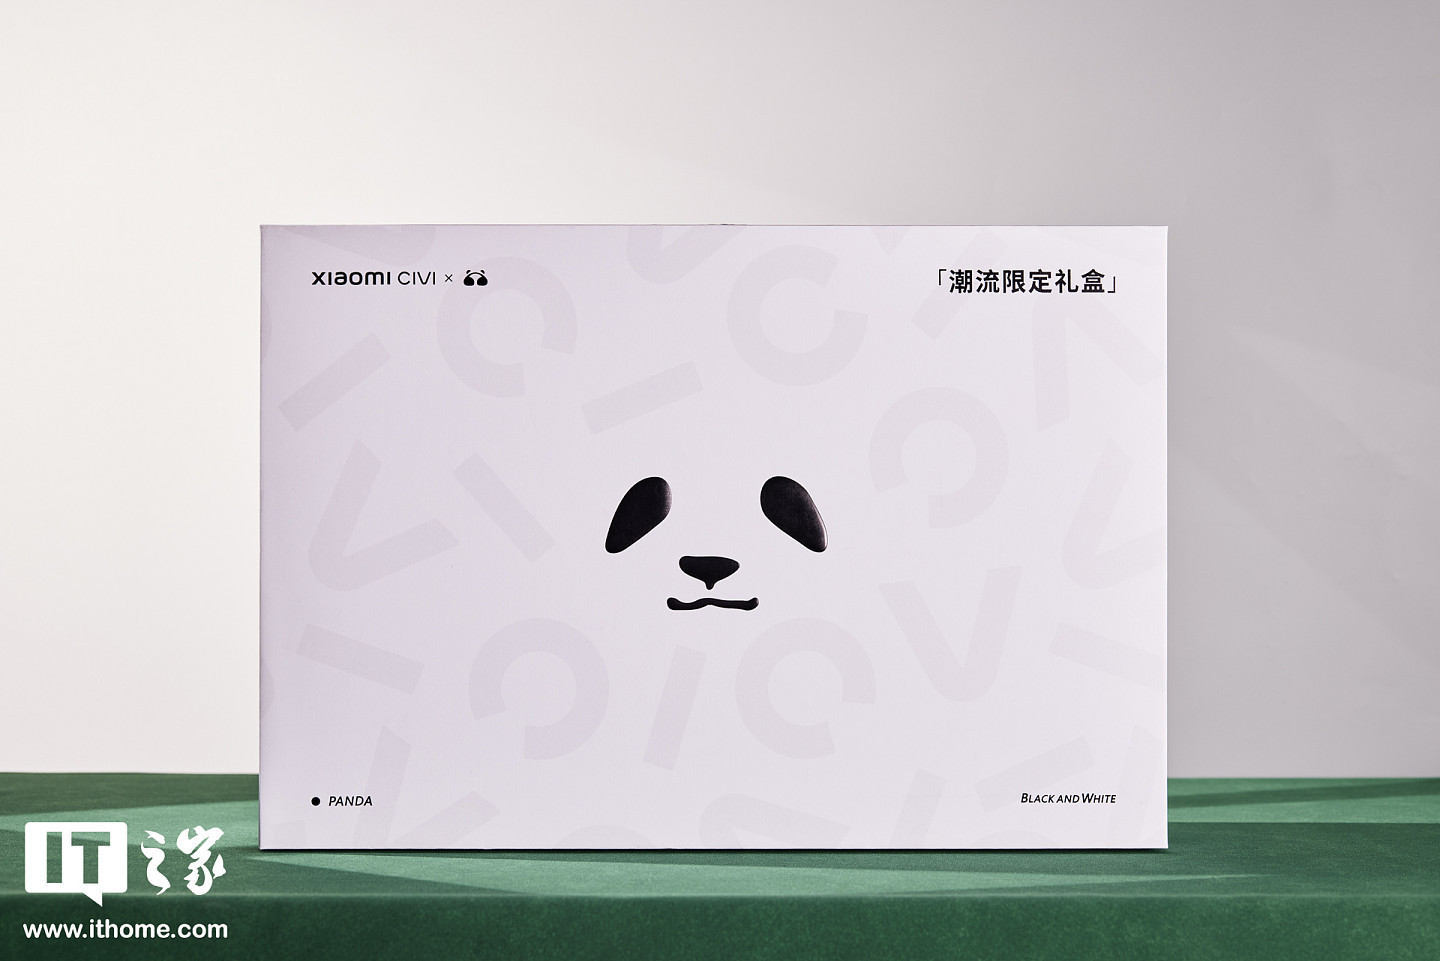 【IT之家开箱】小米 Civi 系列熊猫限定礼盒图赏：熊猫来袭，萌趣兼顾实用 - 1